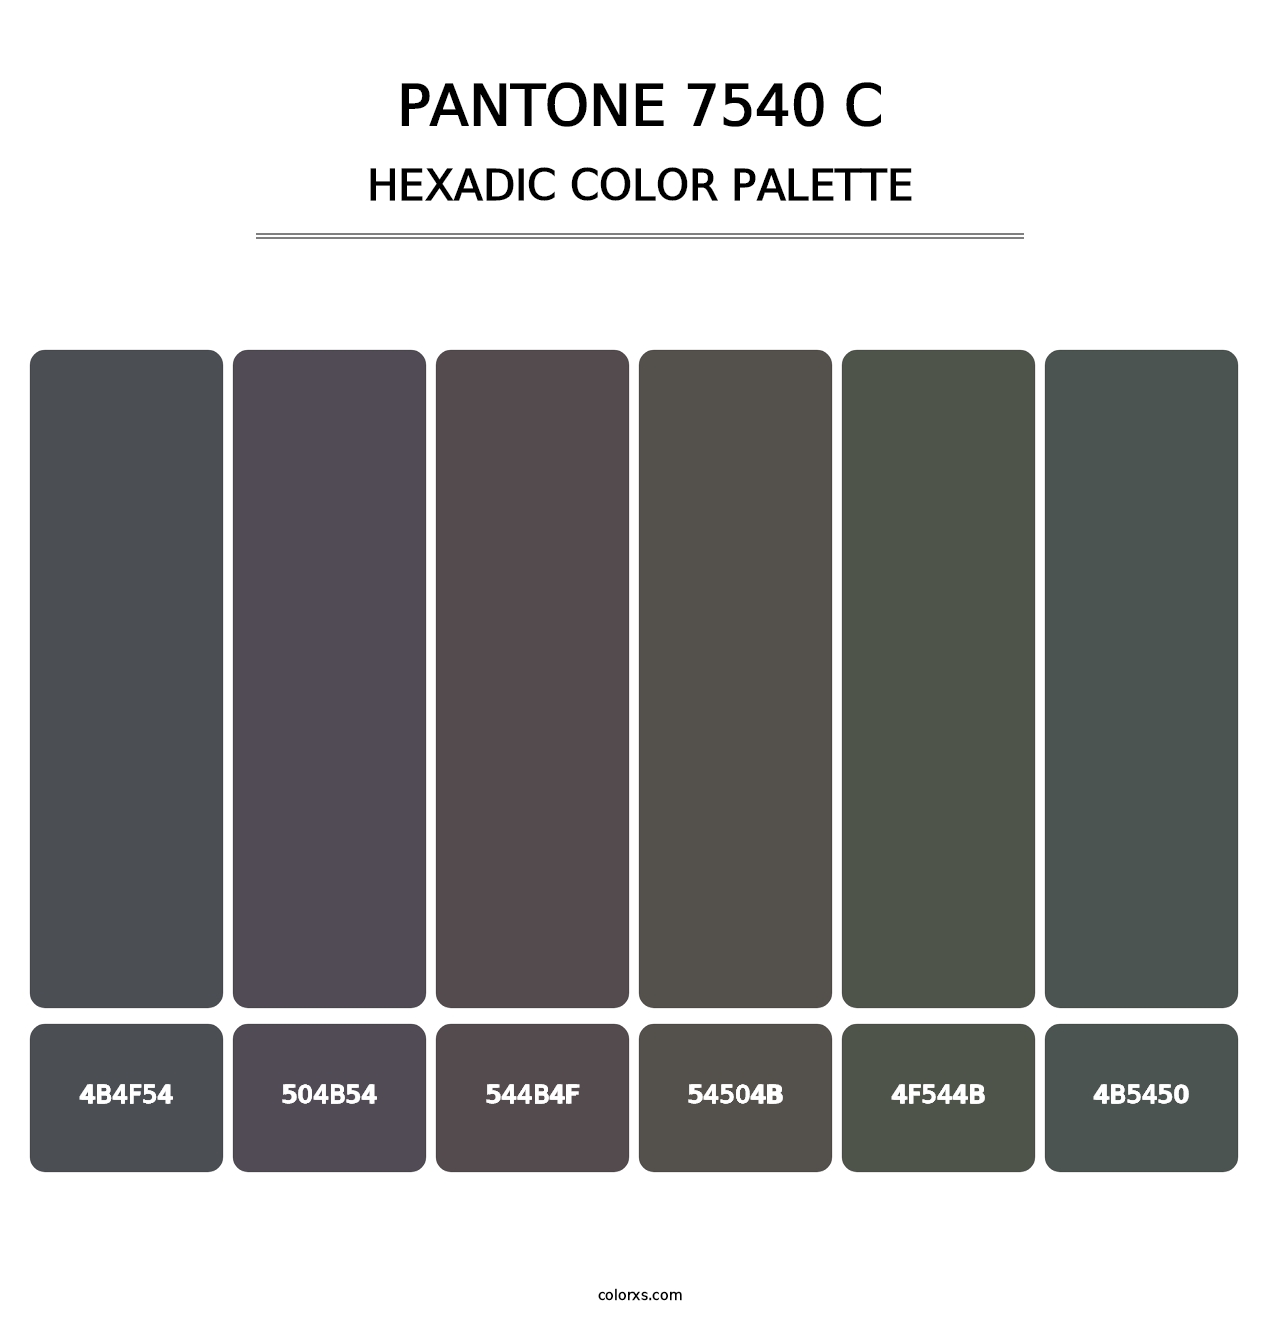 PANTONE 7540 C - Hexadic Color Palette